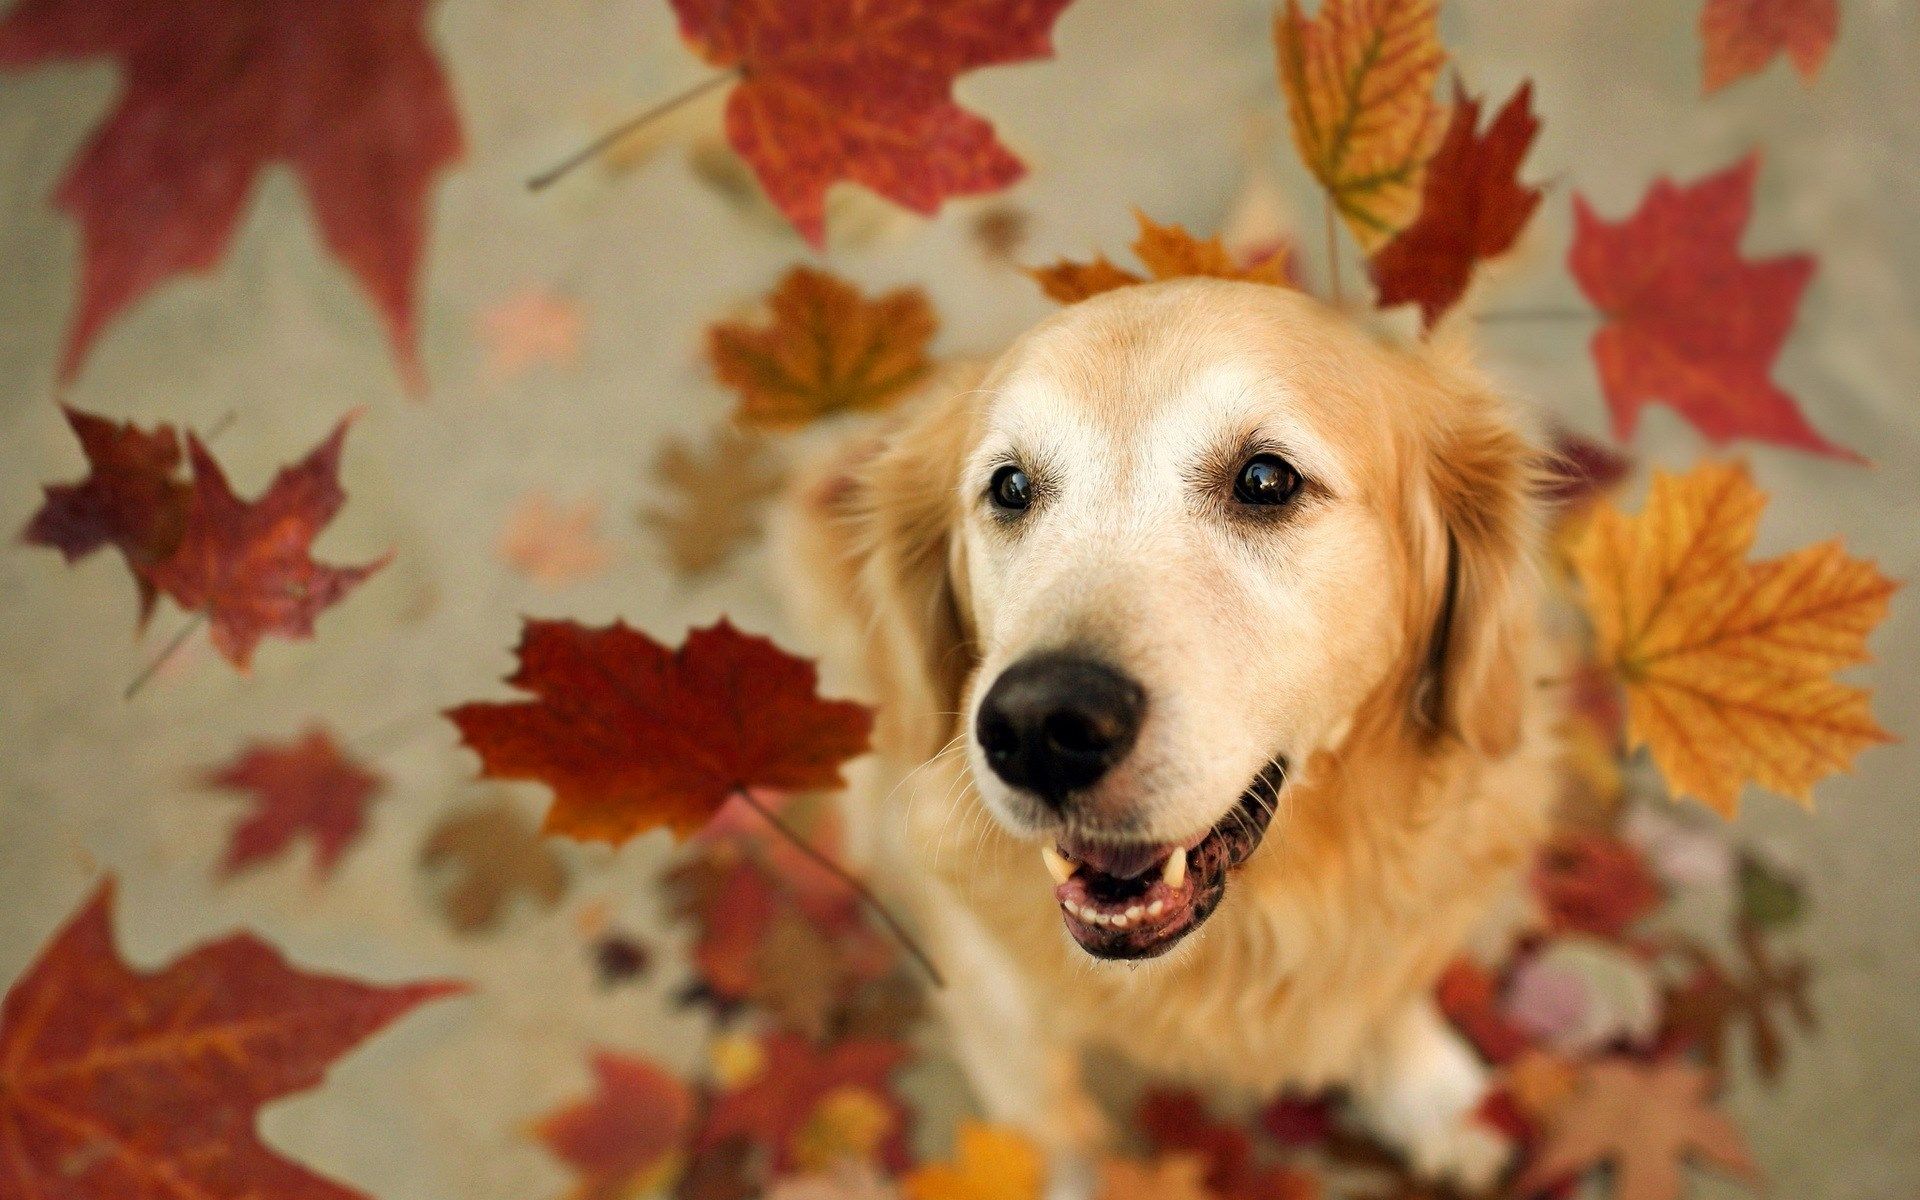 Autumn Pets Desktop Wallpapers